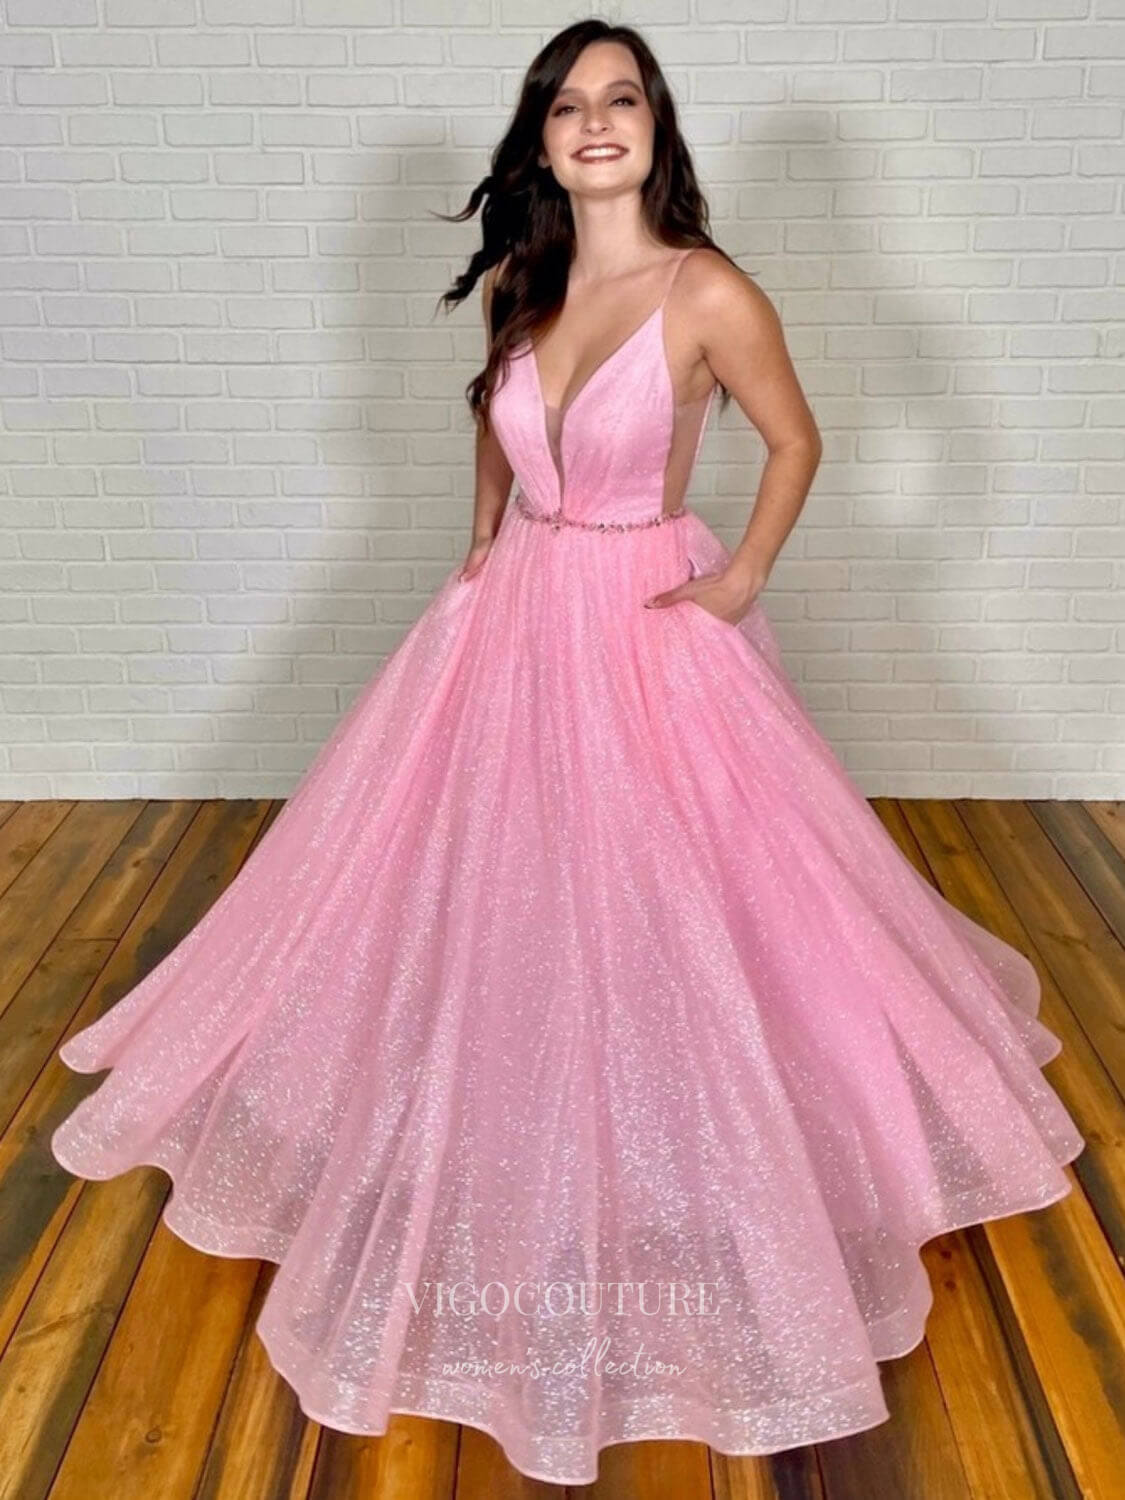 vigocouture-Pink Spaghetti Strap Prom Dresses Sparkly Tulle Evening Dress 21757-Prom Dresses-vigocouture-Pink-US2-